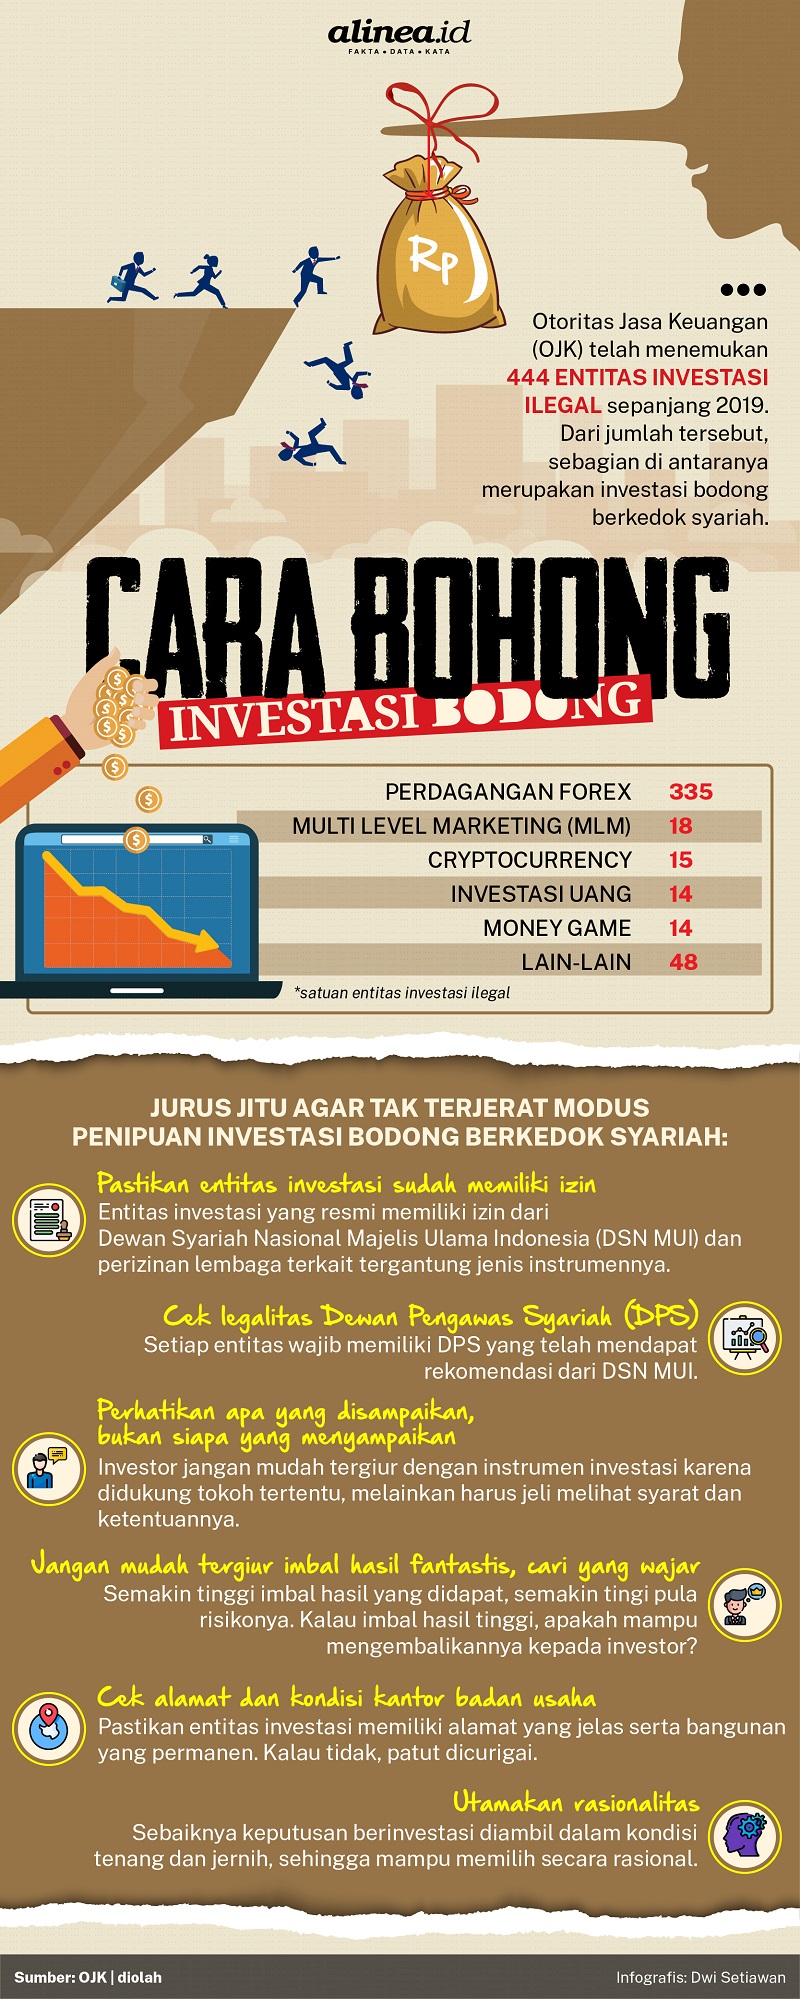 Infografik investasi syariah bodong. Alinea.id/Dwi Setiawan